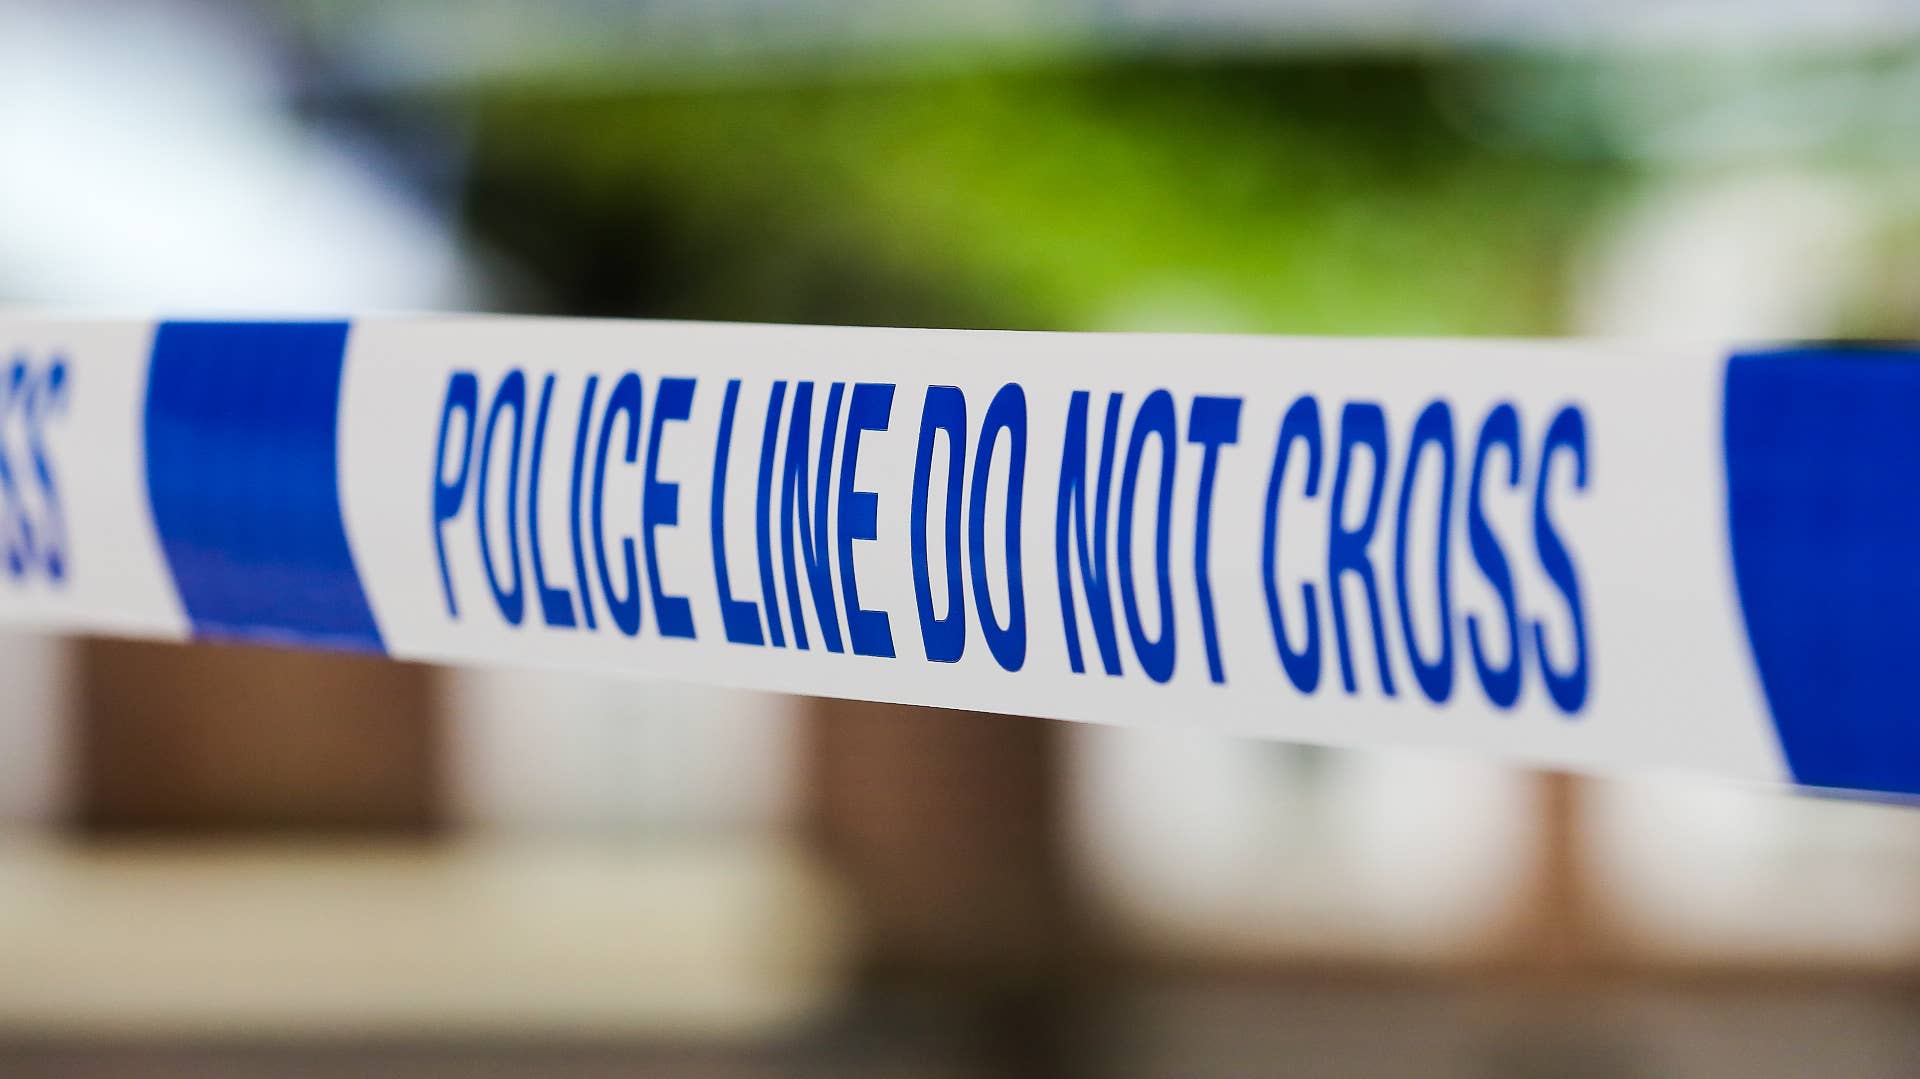 Police tape seen around the crime scene in London.